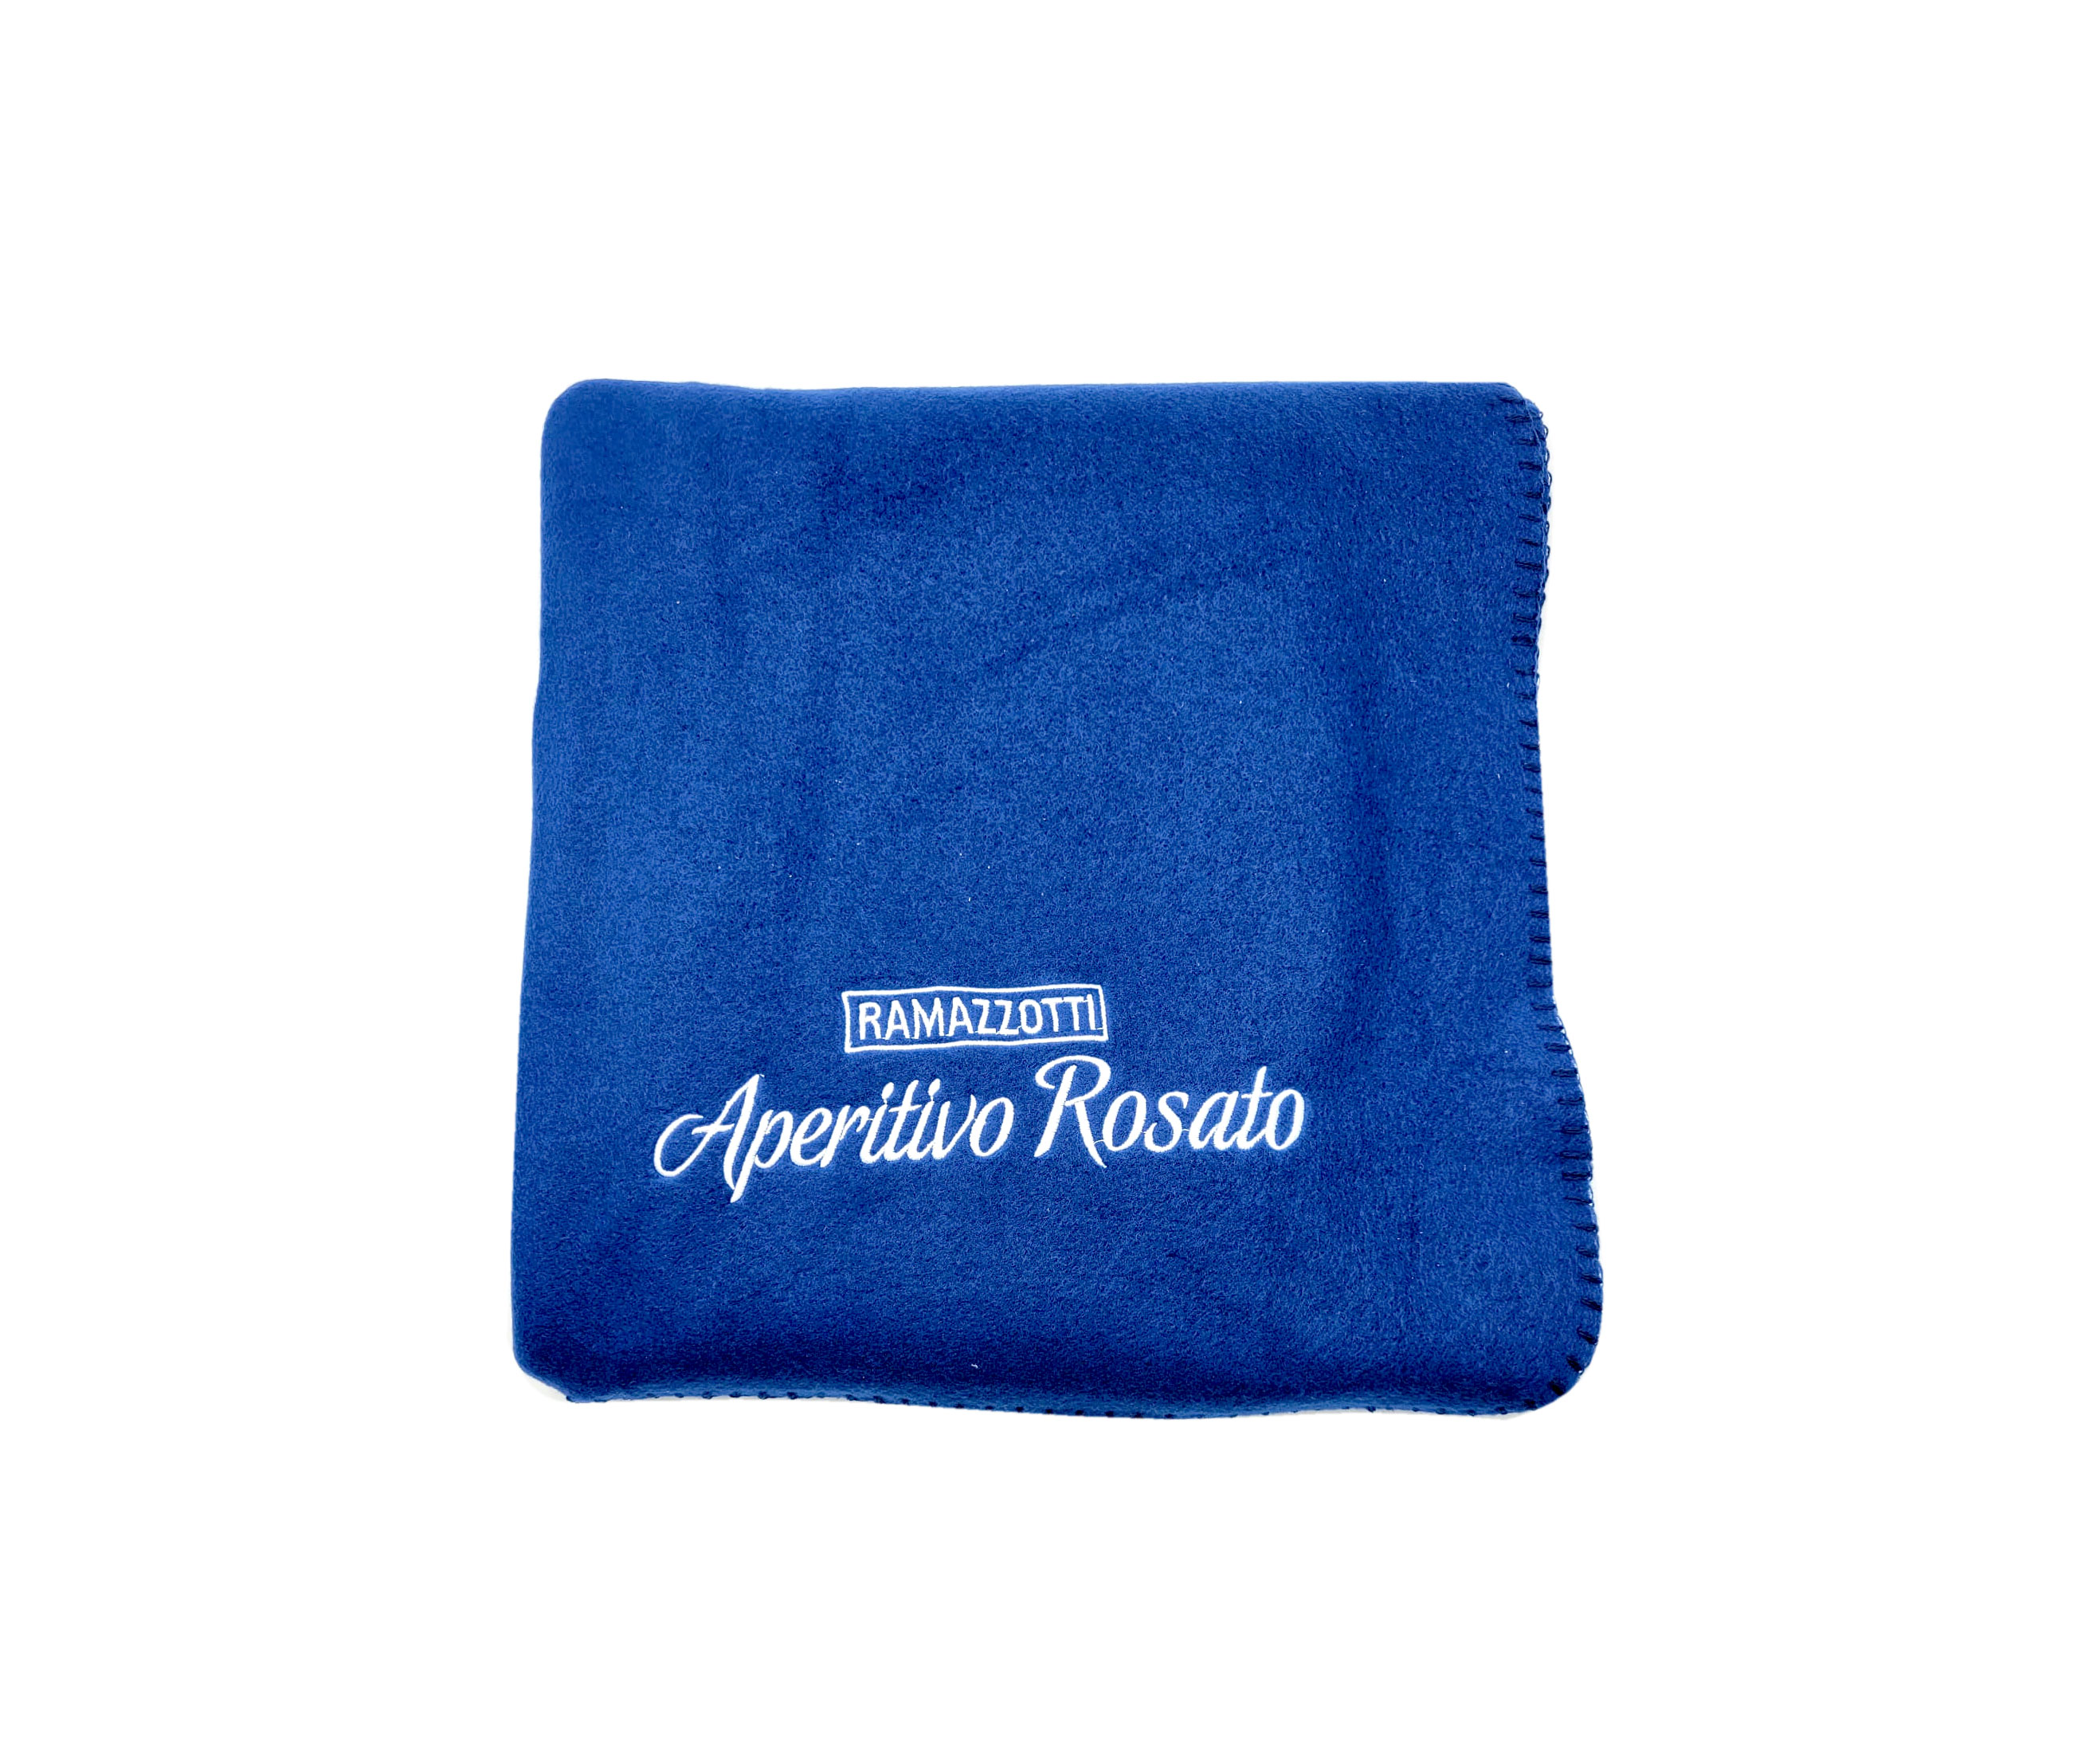 Ramazzotti Aperitivo Rosato Decke Kuscheldecke 100% Polyester - blau - ca. 150x120cm